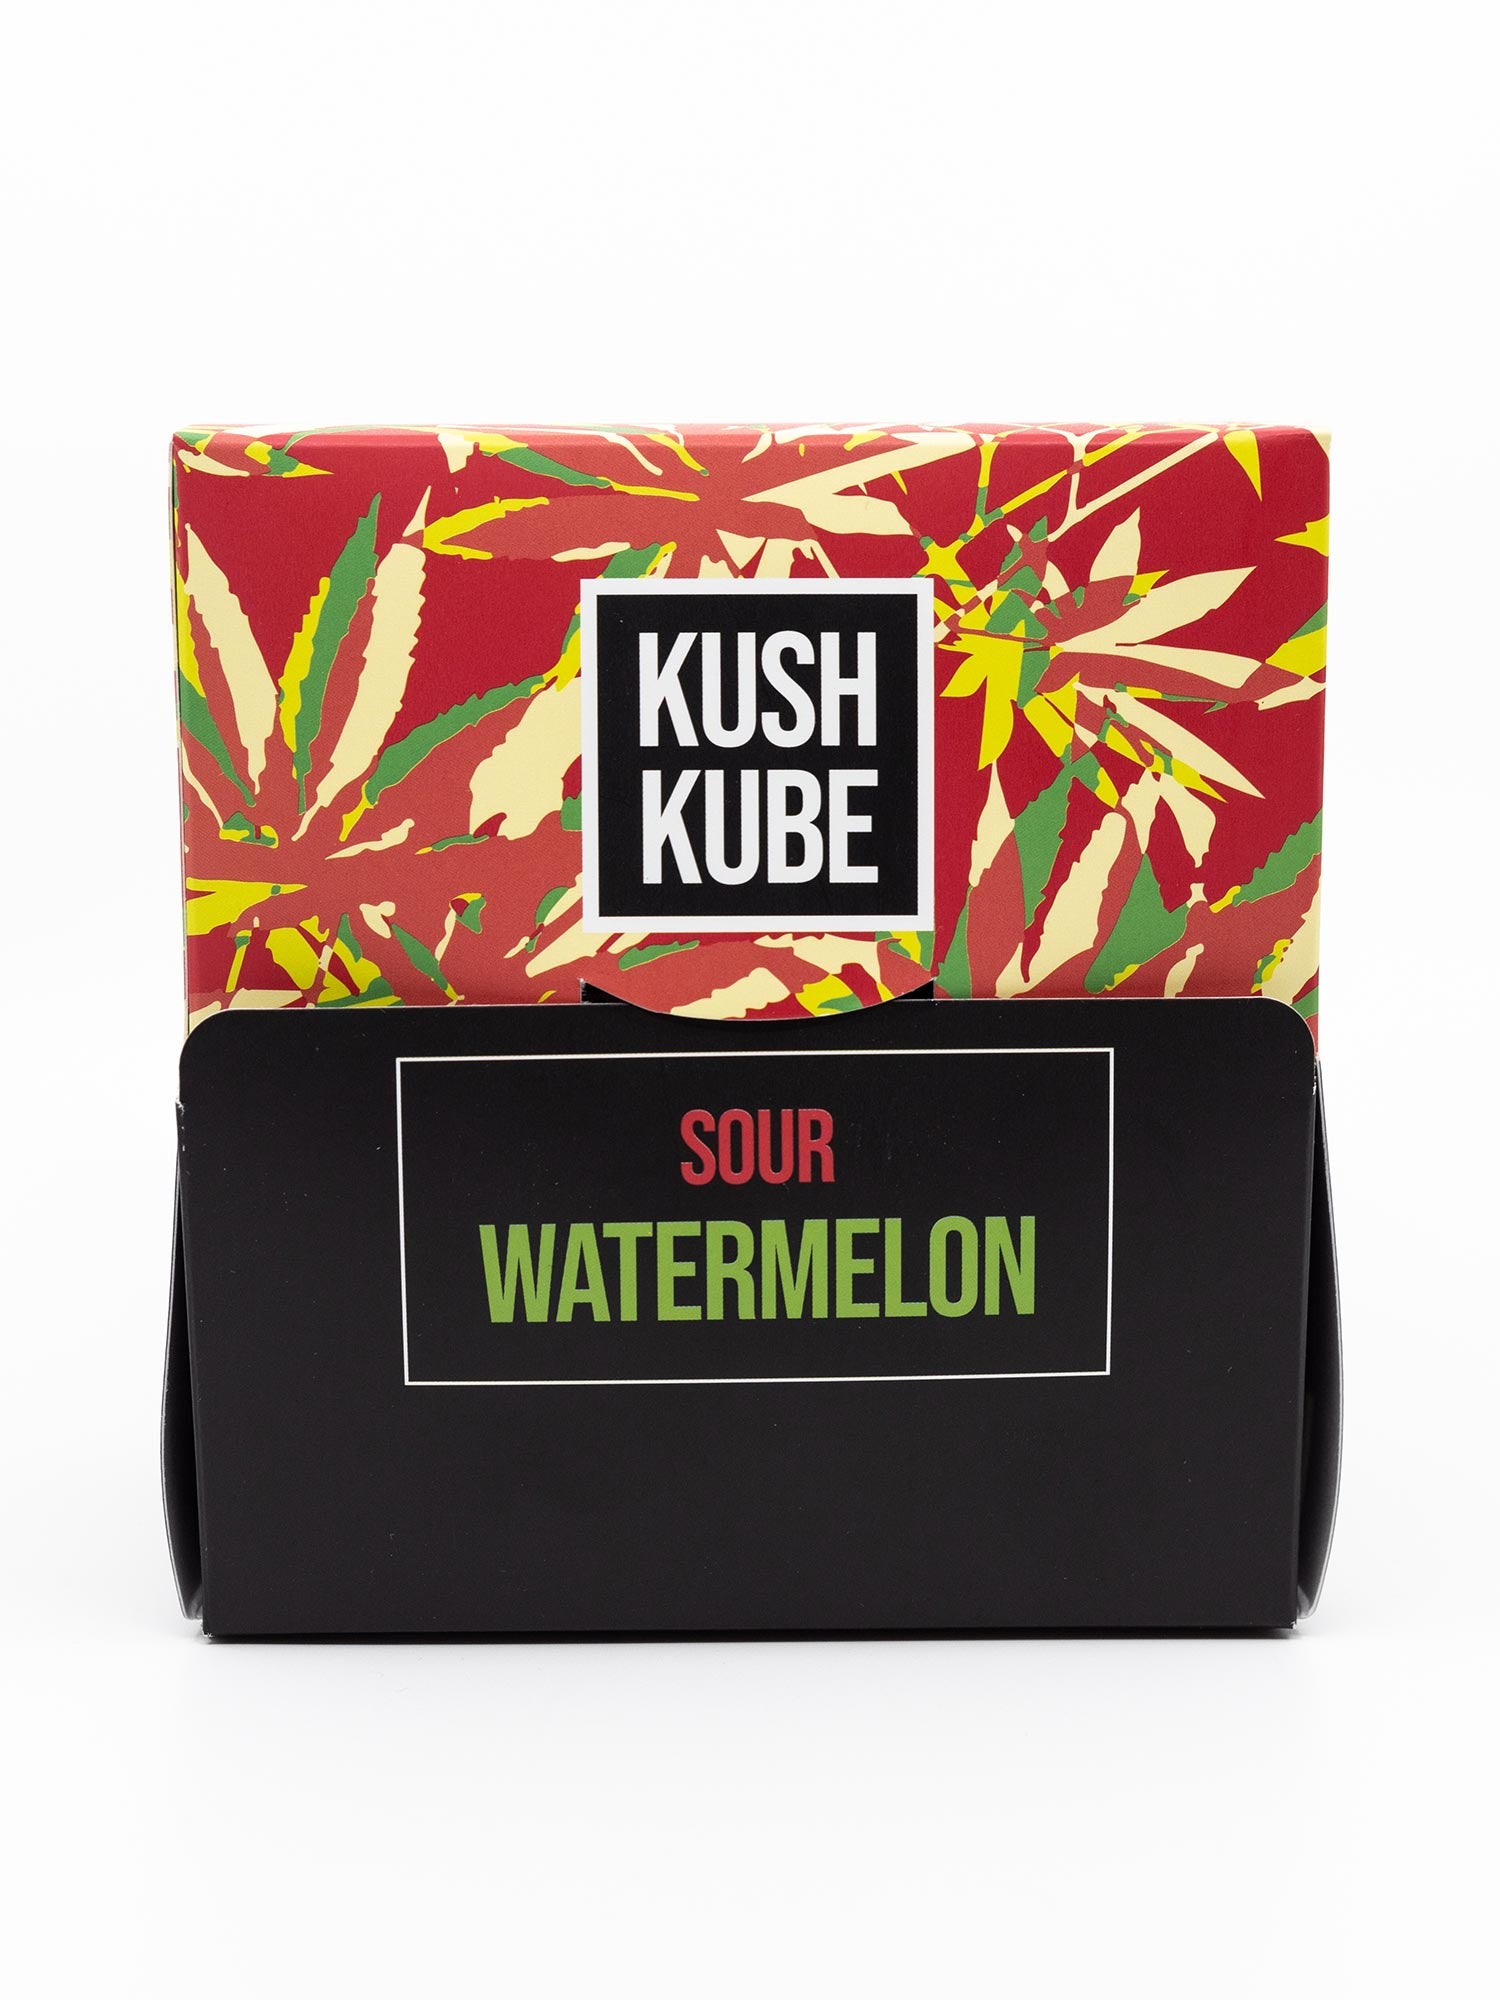 Sour Watermelon -  30 - 2 Pack Box